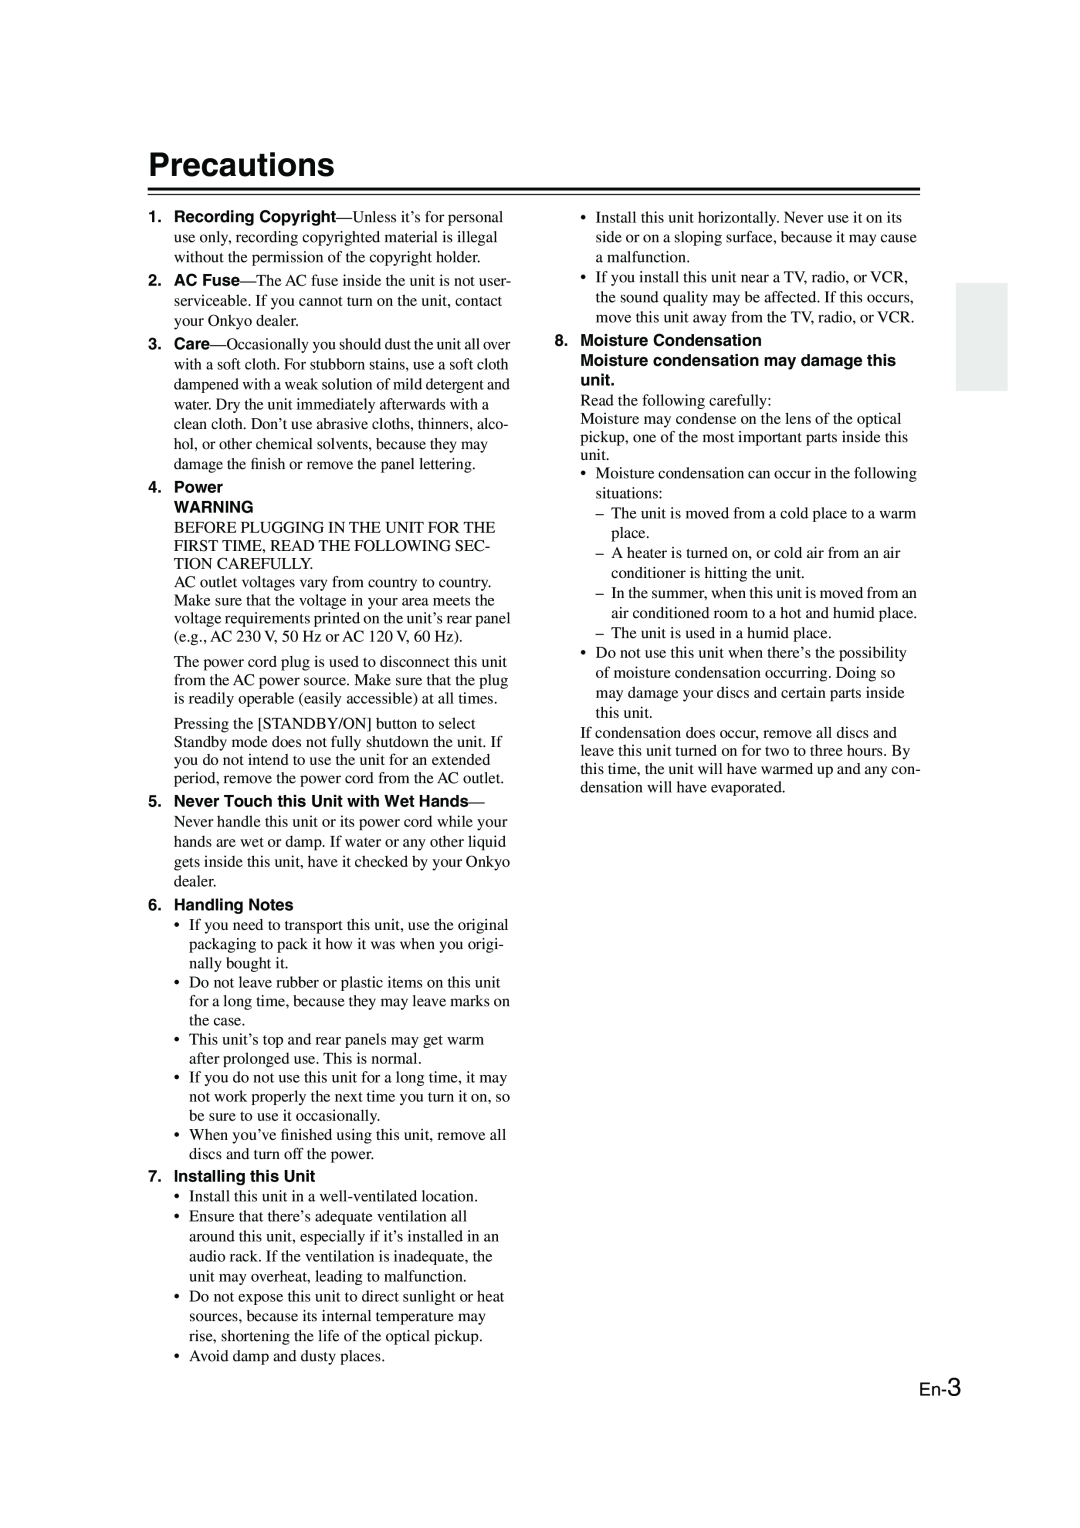 Onkyo CBX-300 instruction manual Precautions, En-3 